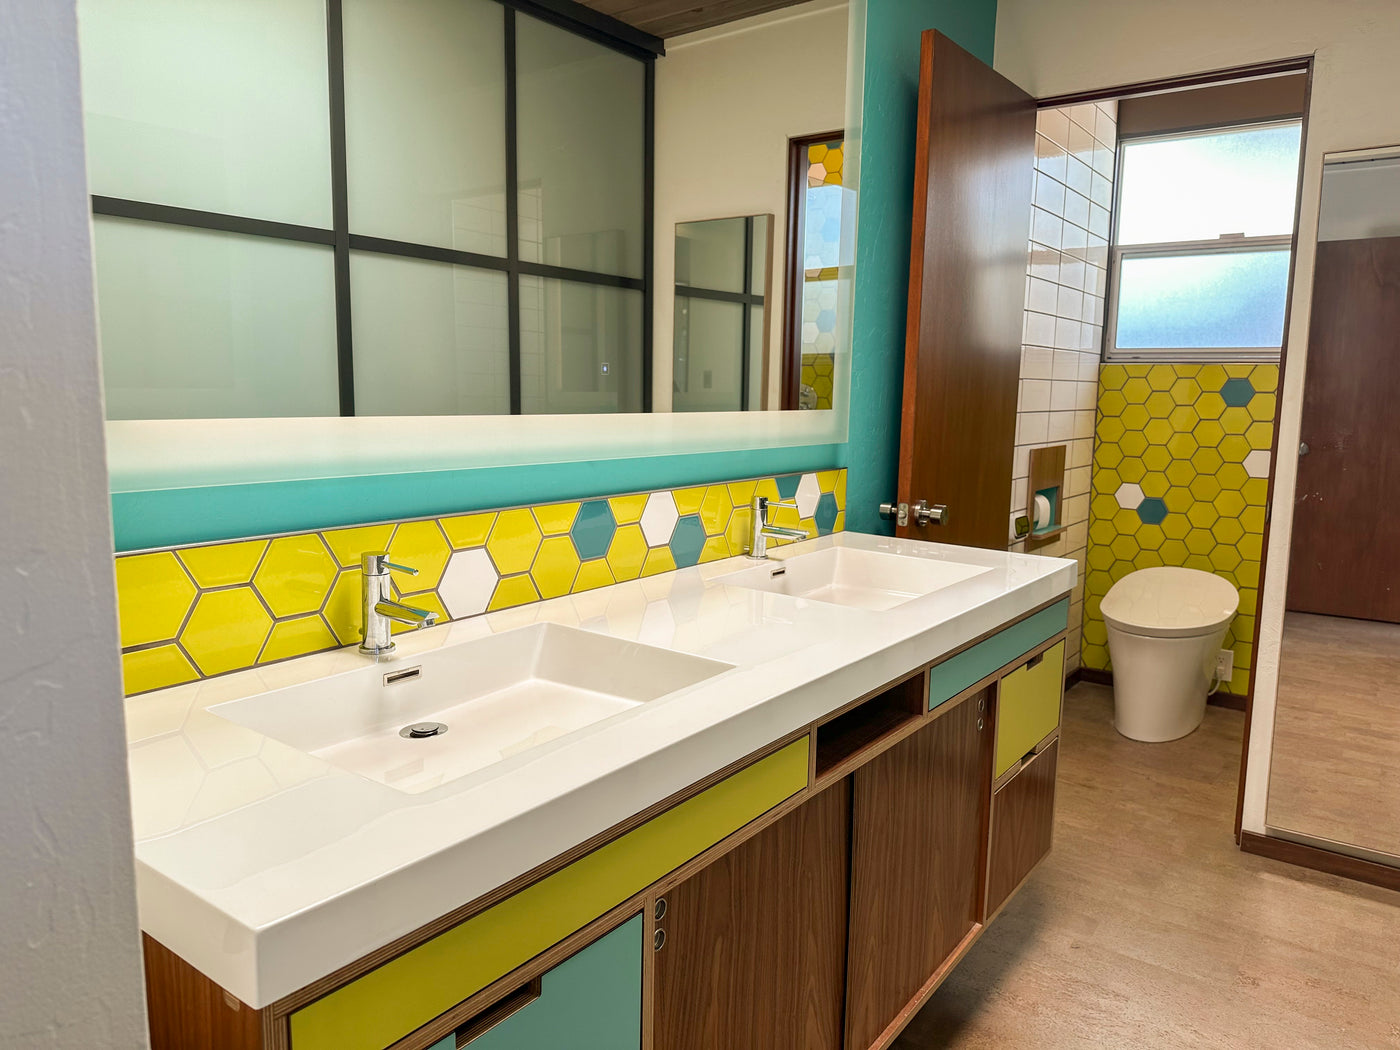 Modwalls Kiln Handmade Ceramic Tile | Hexagon | Colorful Modern tile for backsplashes, kitchens, bathrooms, showers & feature areas. 